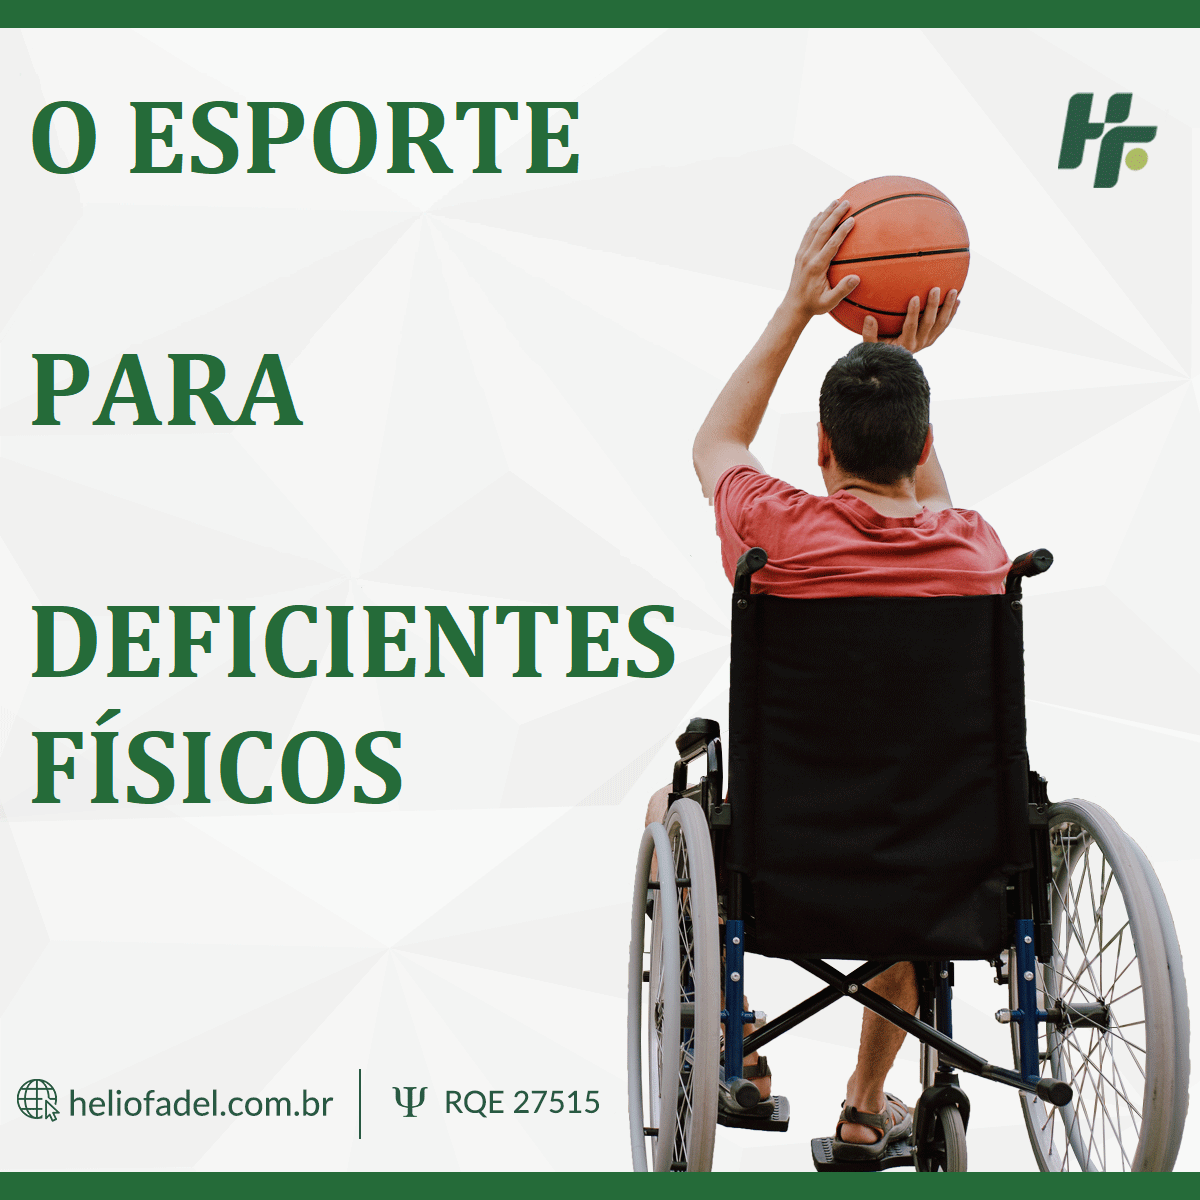 Deficientes físicos e esporte - O esporte para deficientes físicos